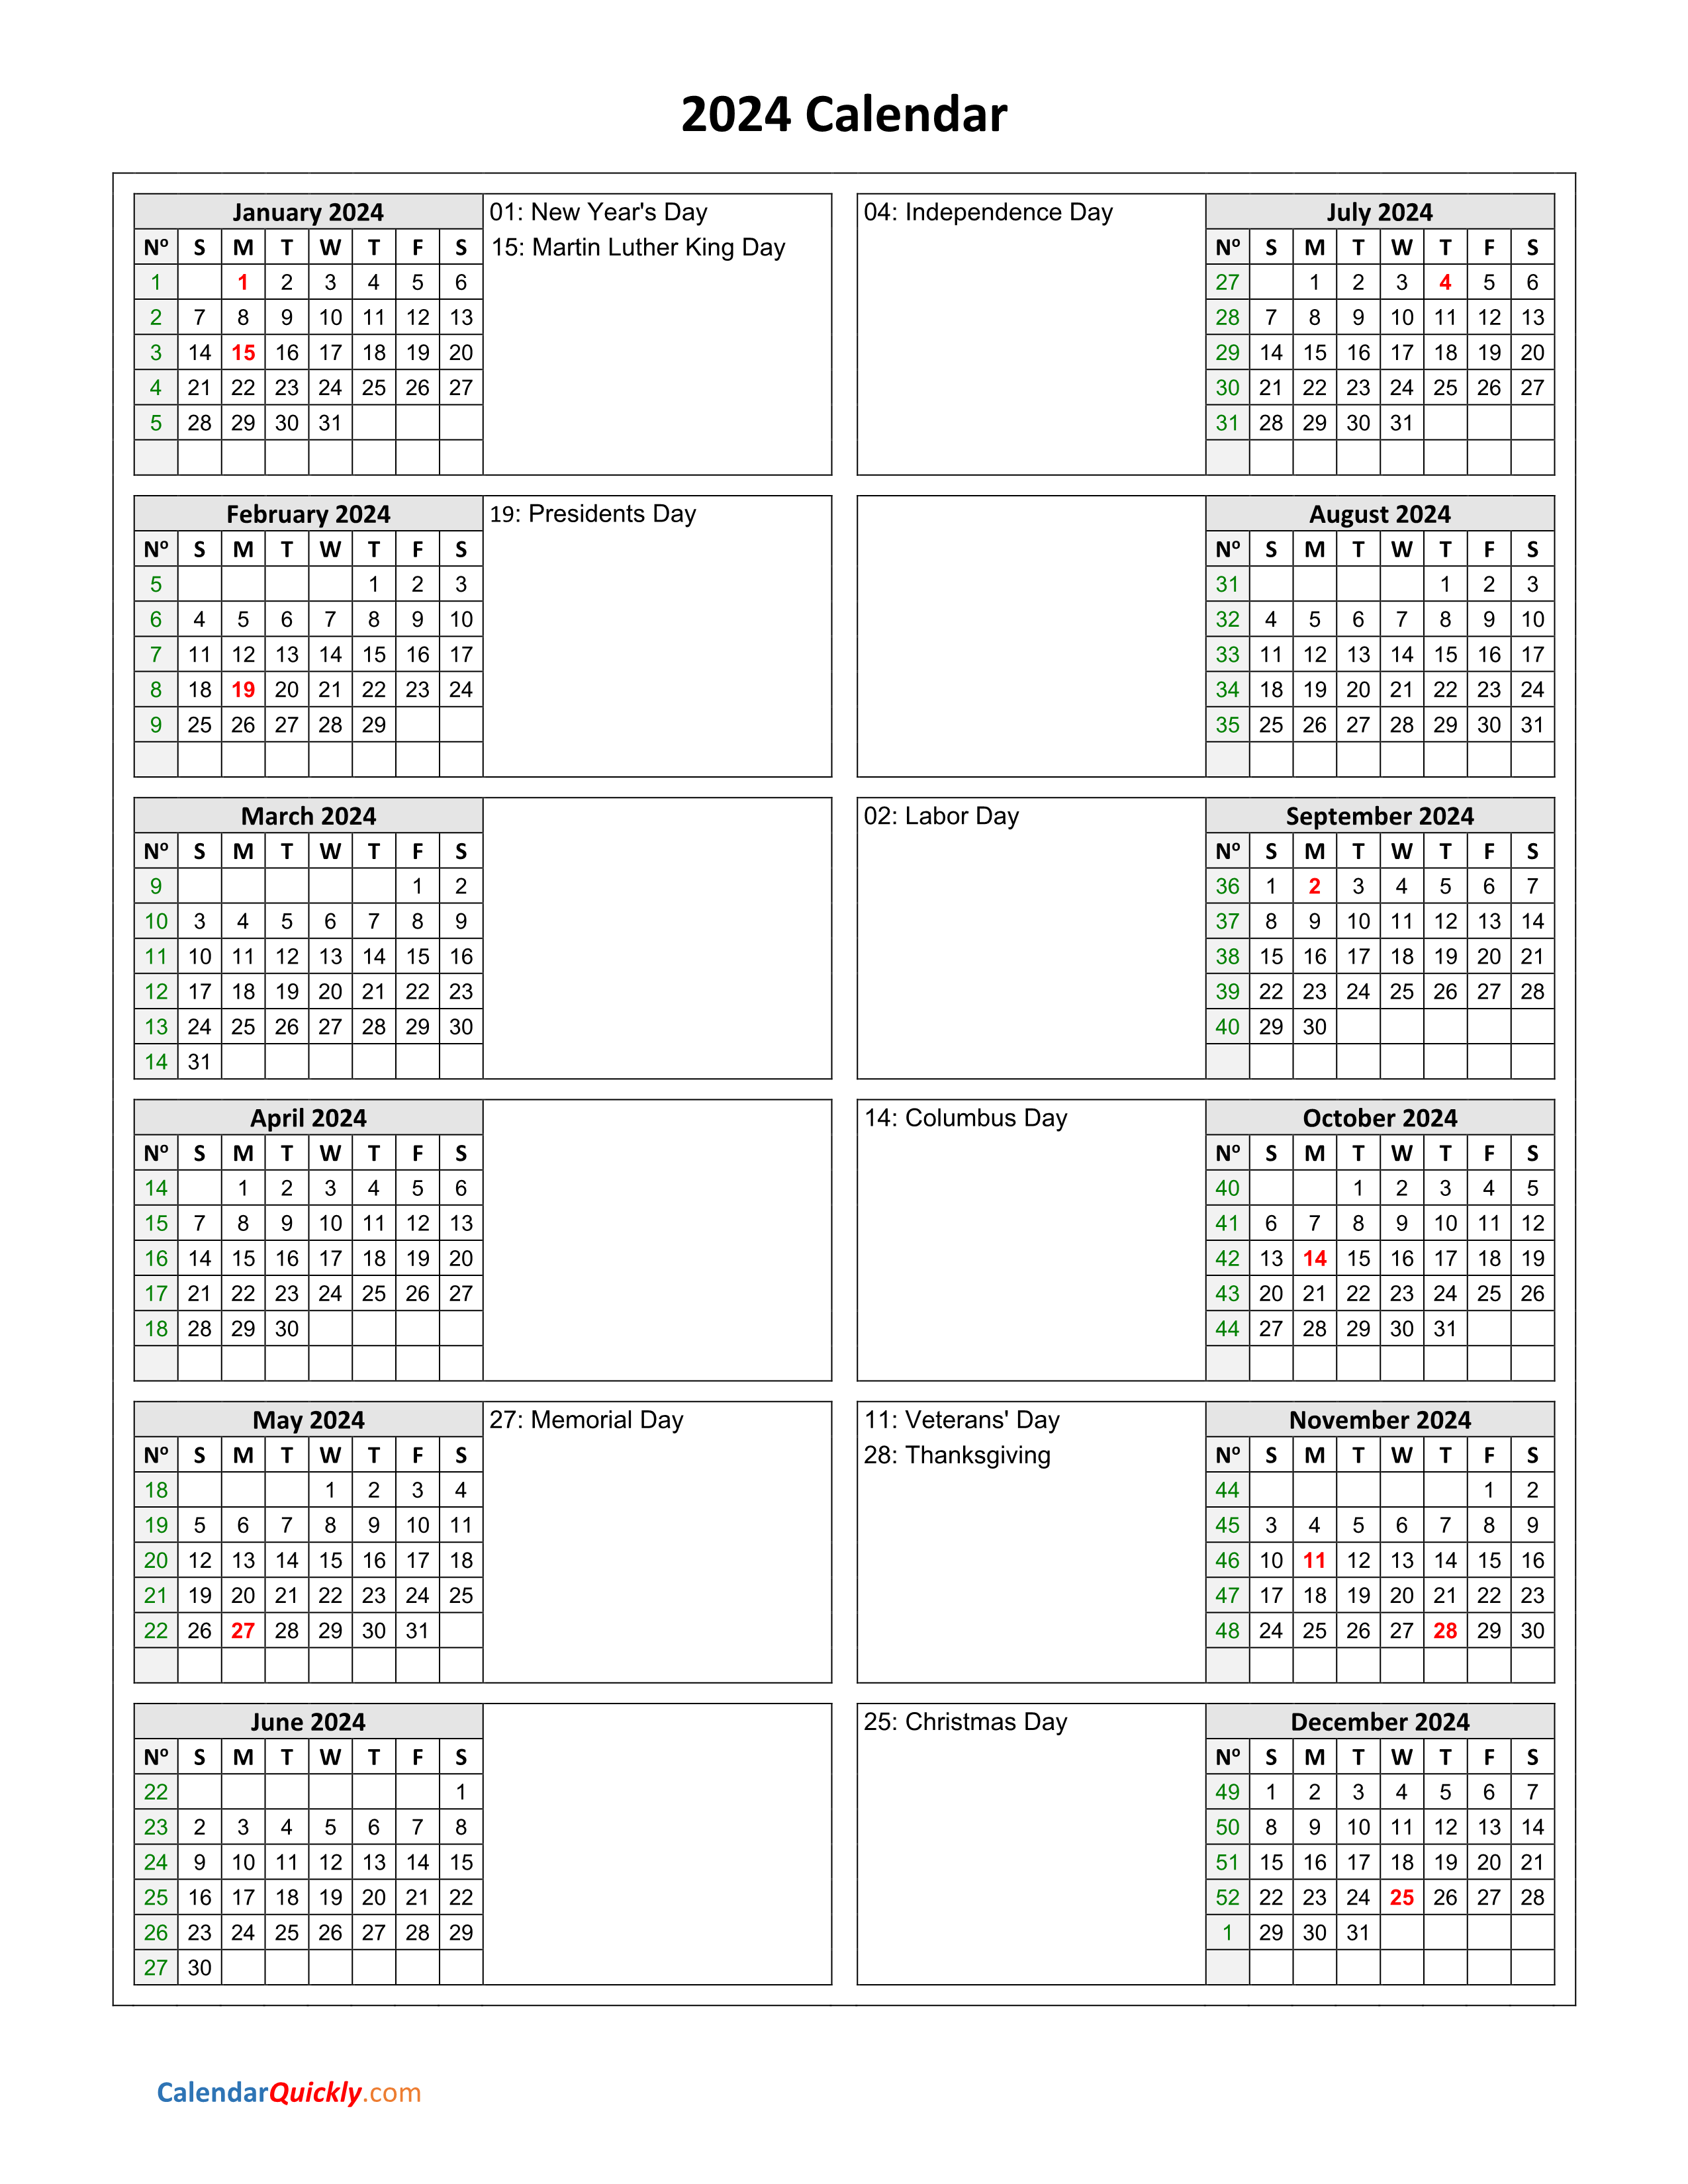 holidays-calendar-2024-vertical-calendar-quickly